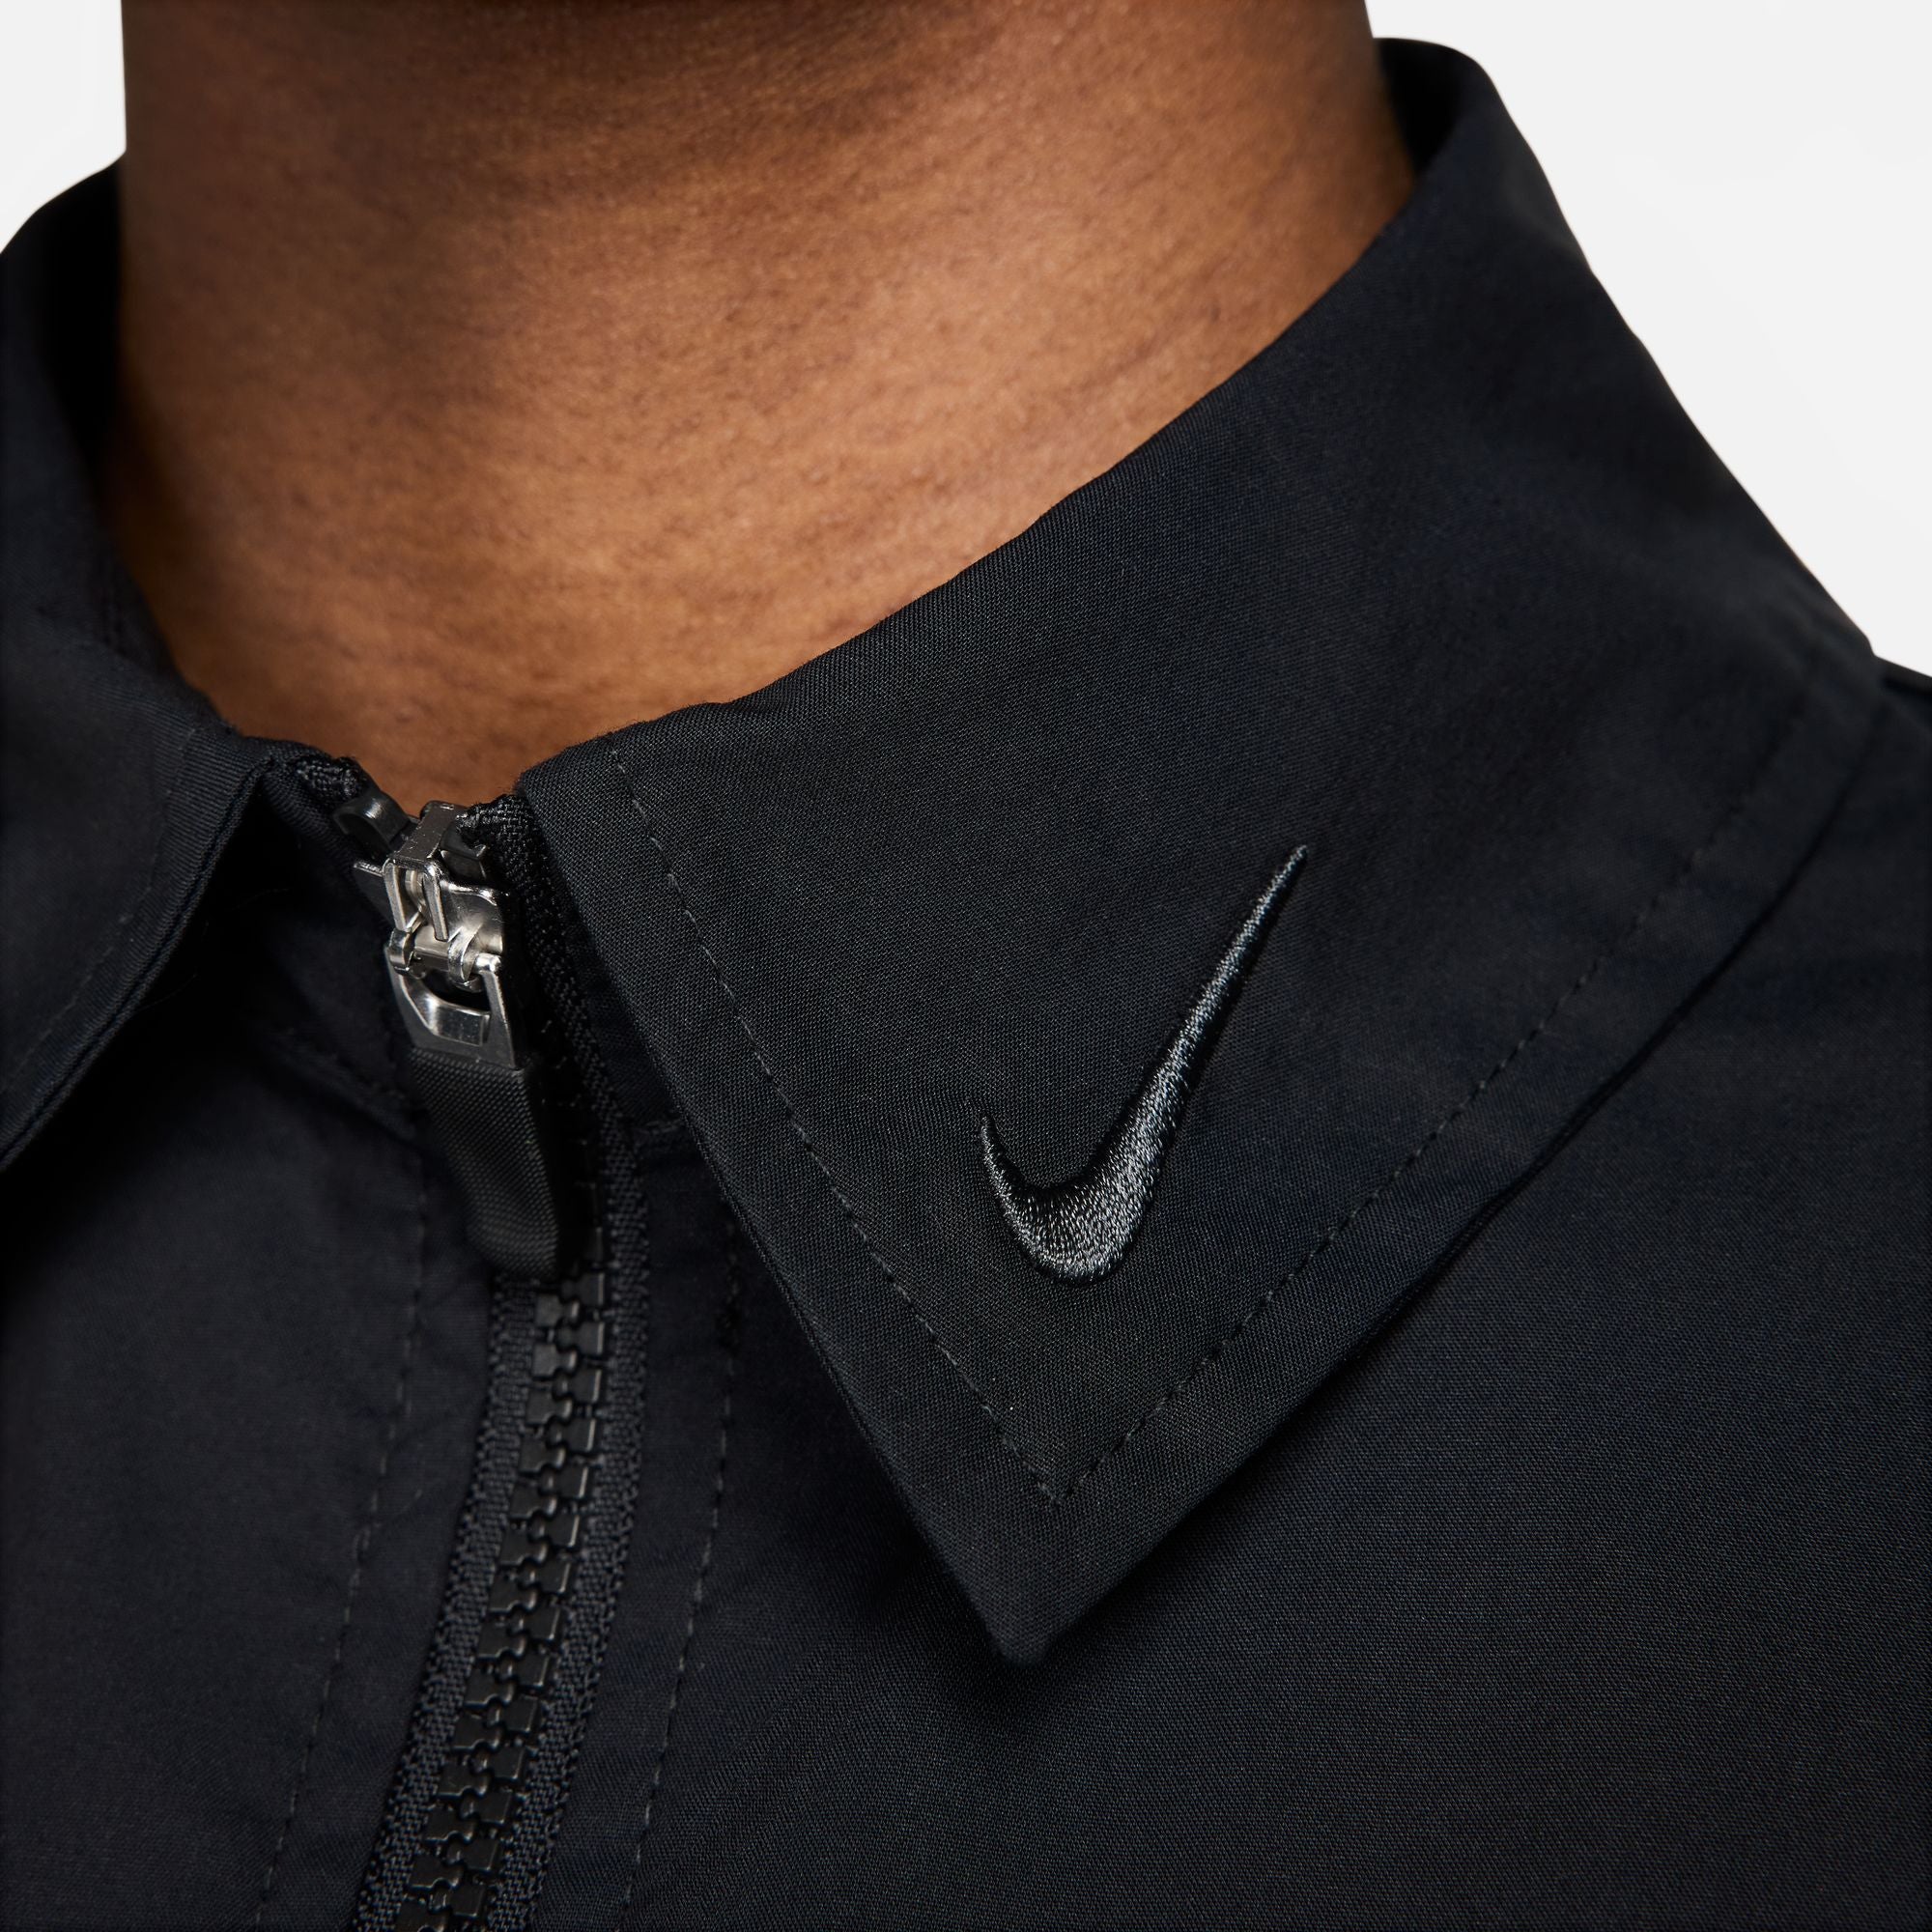 Nike Sportswear Women's Black Short-Sleeve Cropped Collared Top